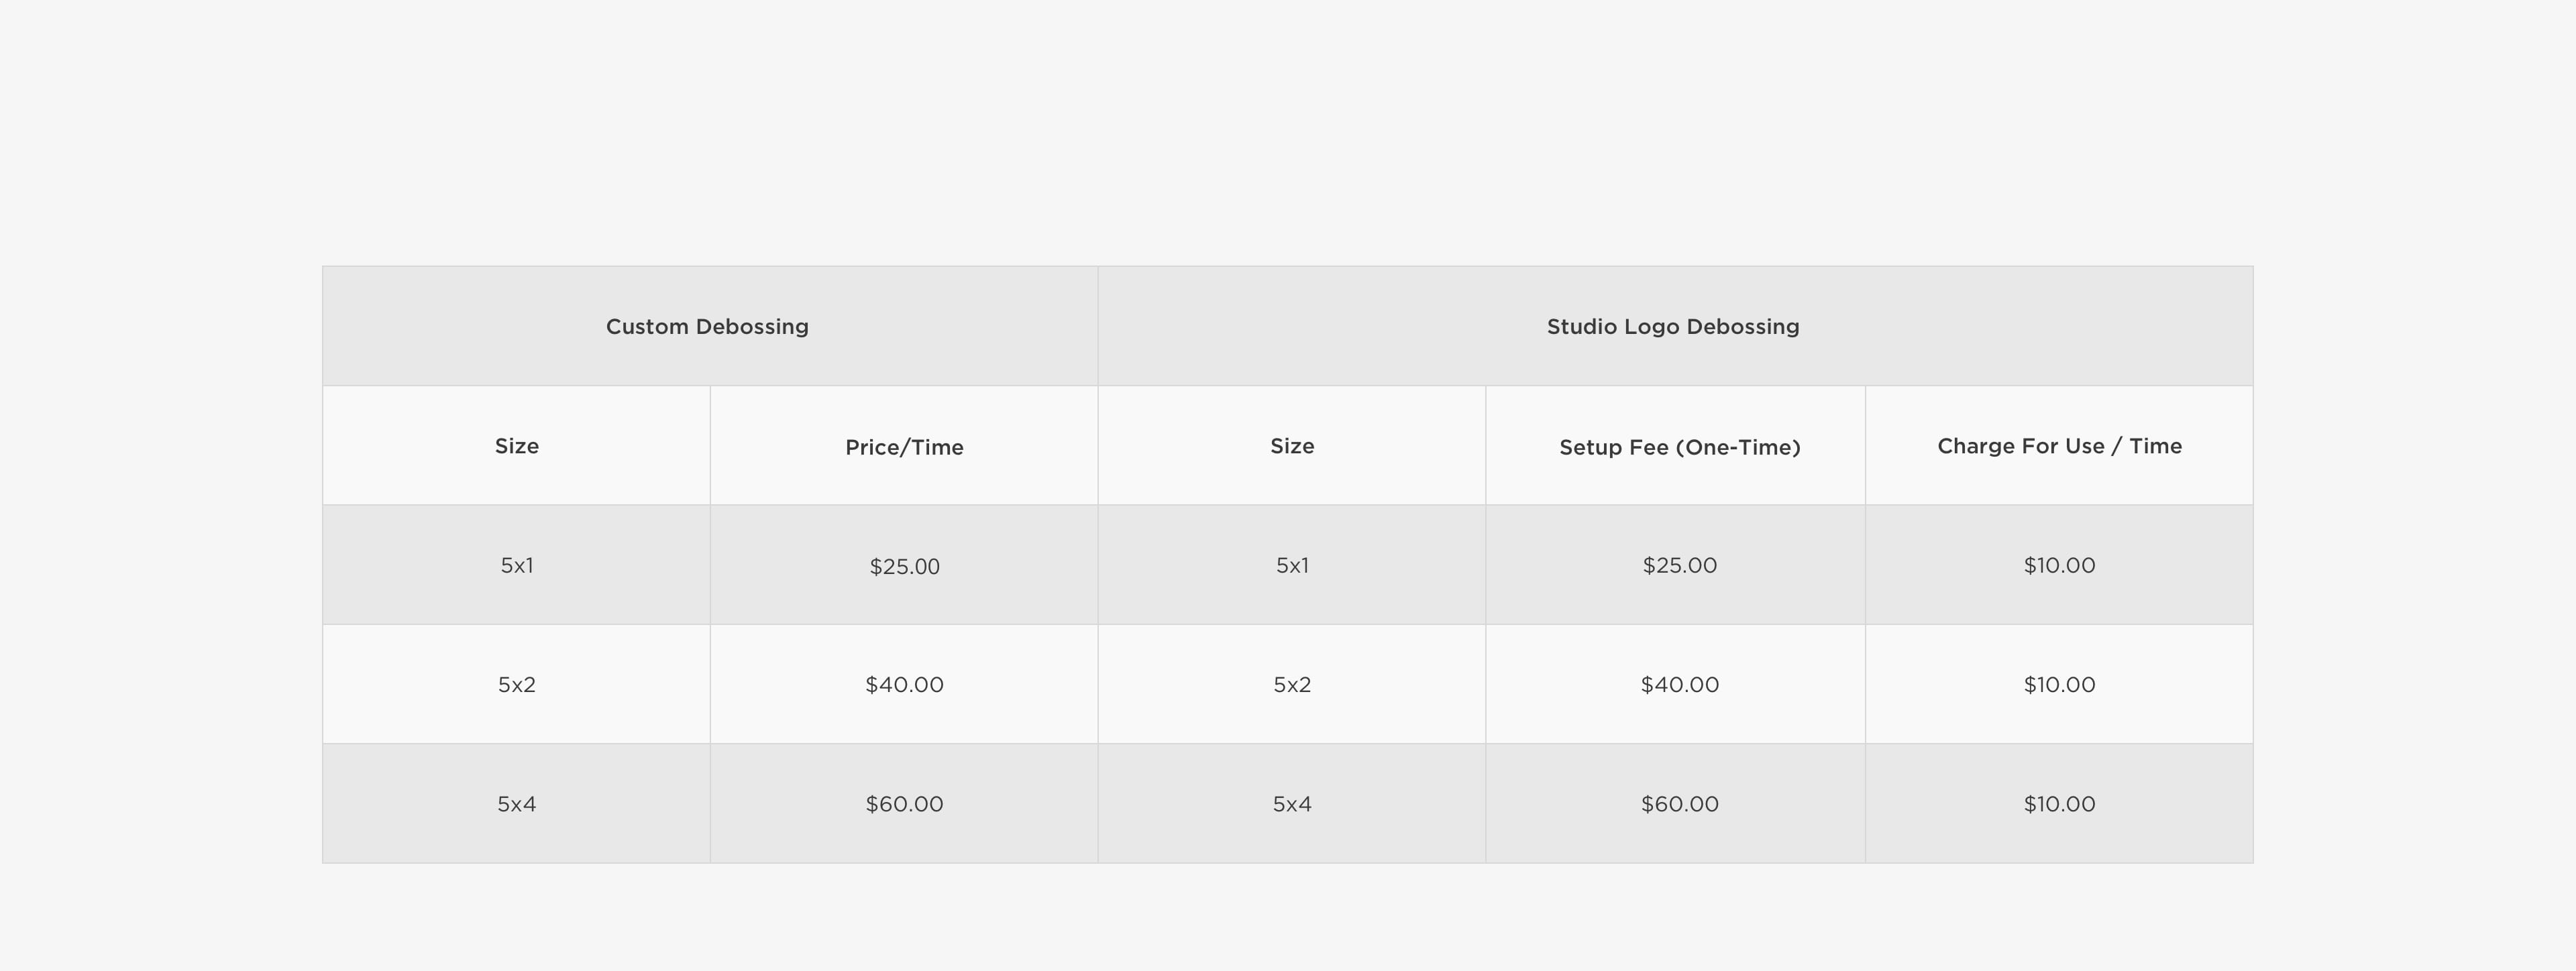 graphic showing price comparison of studio logo debossing and custom debossing